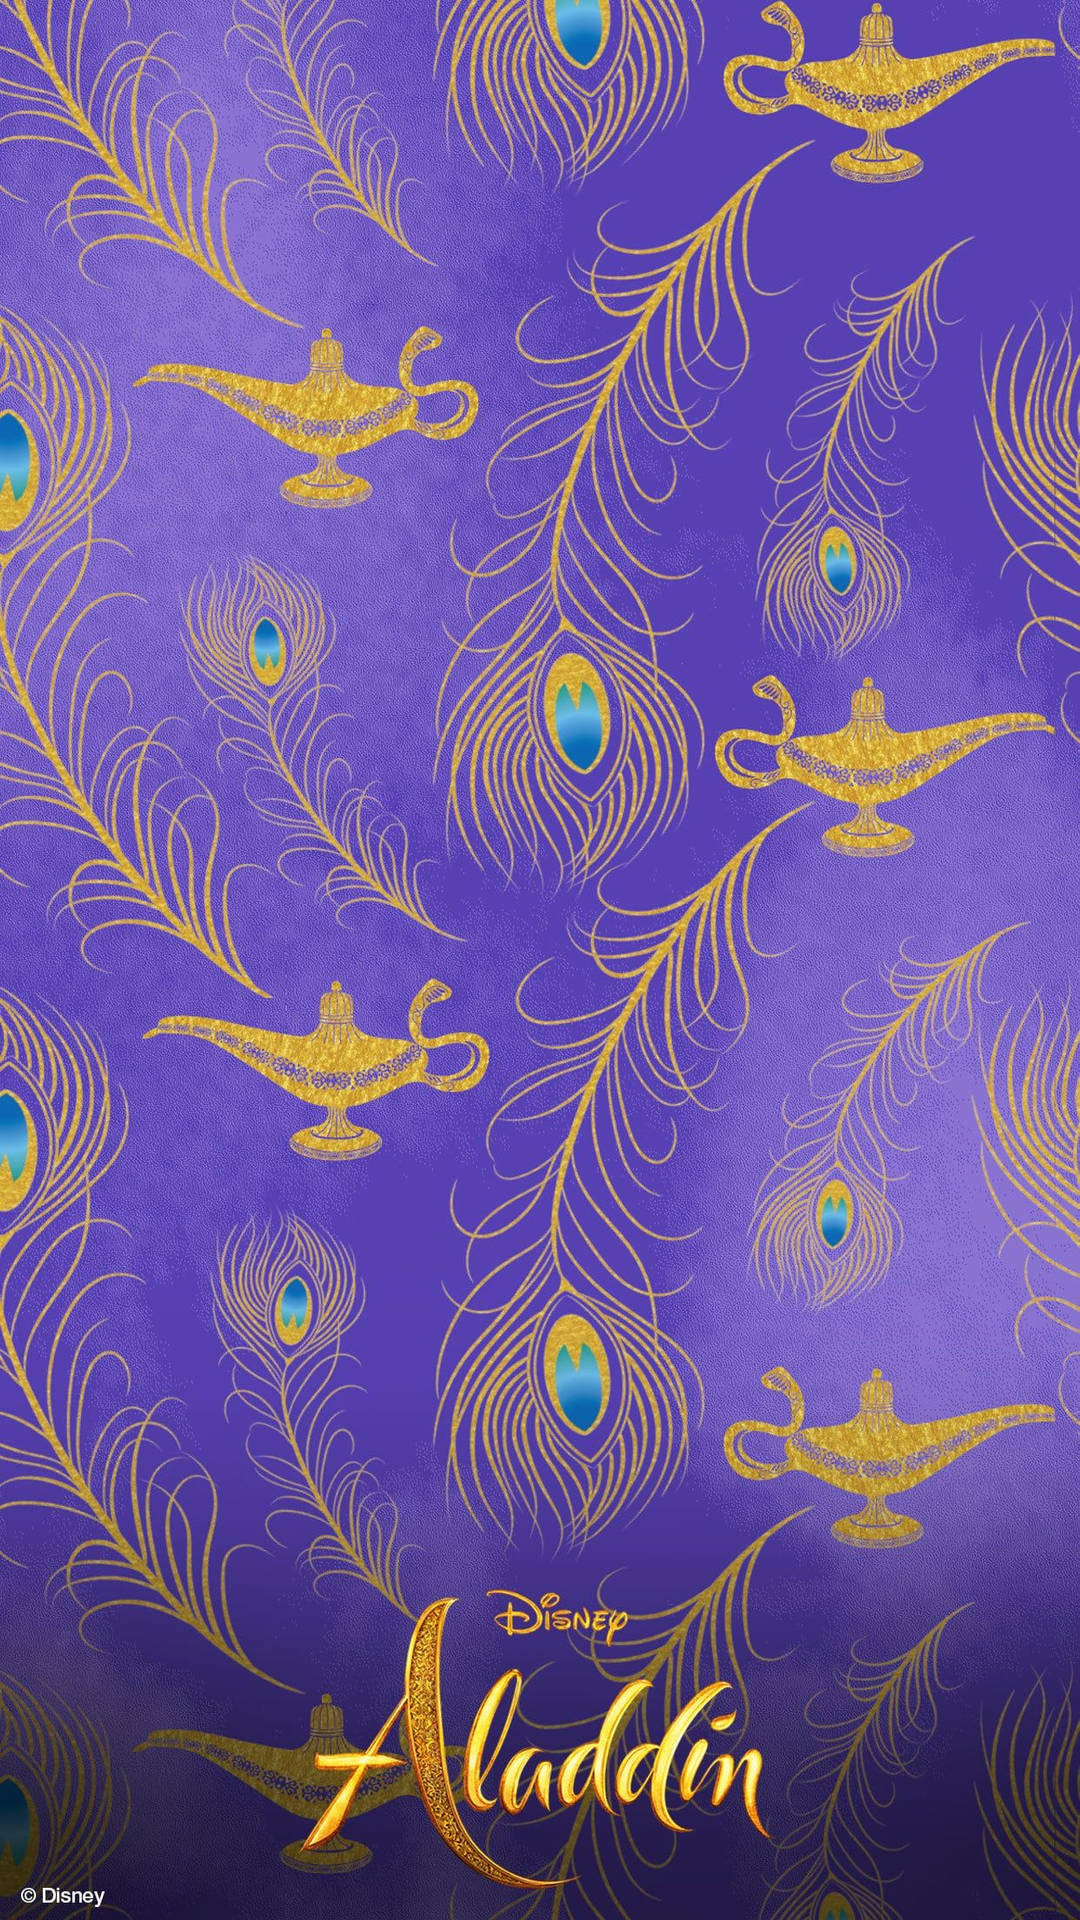 Aladdin Lamp On Purple Background Wallpaper